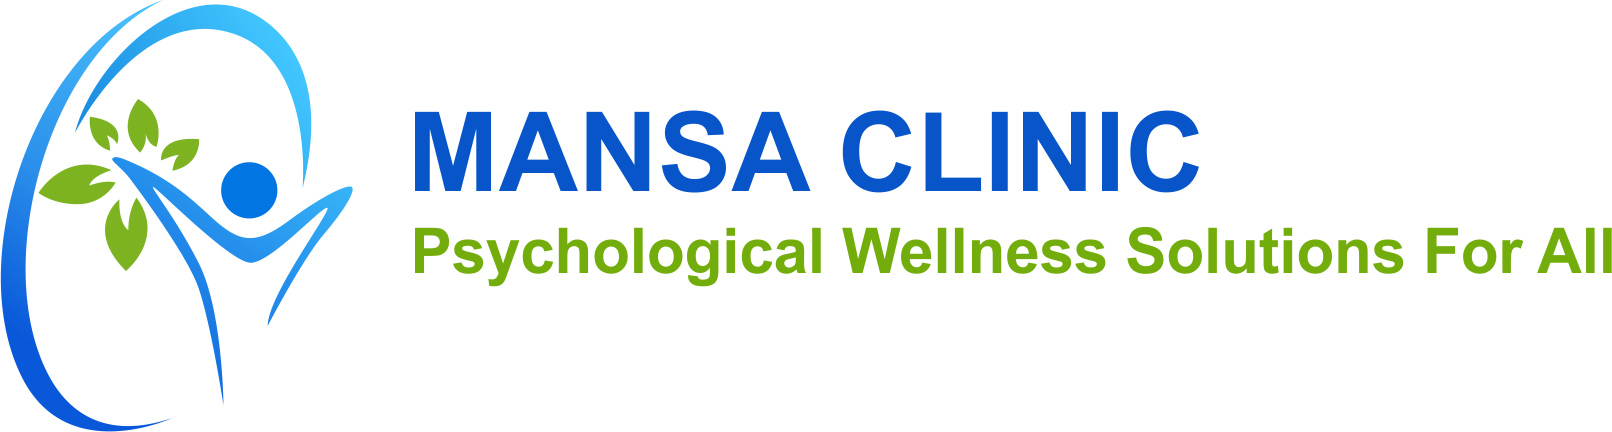 Mansa Clinic logo